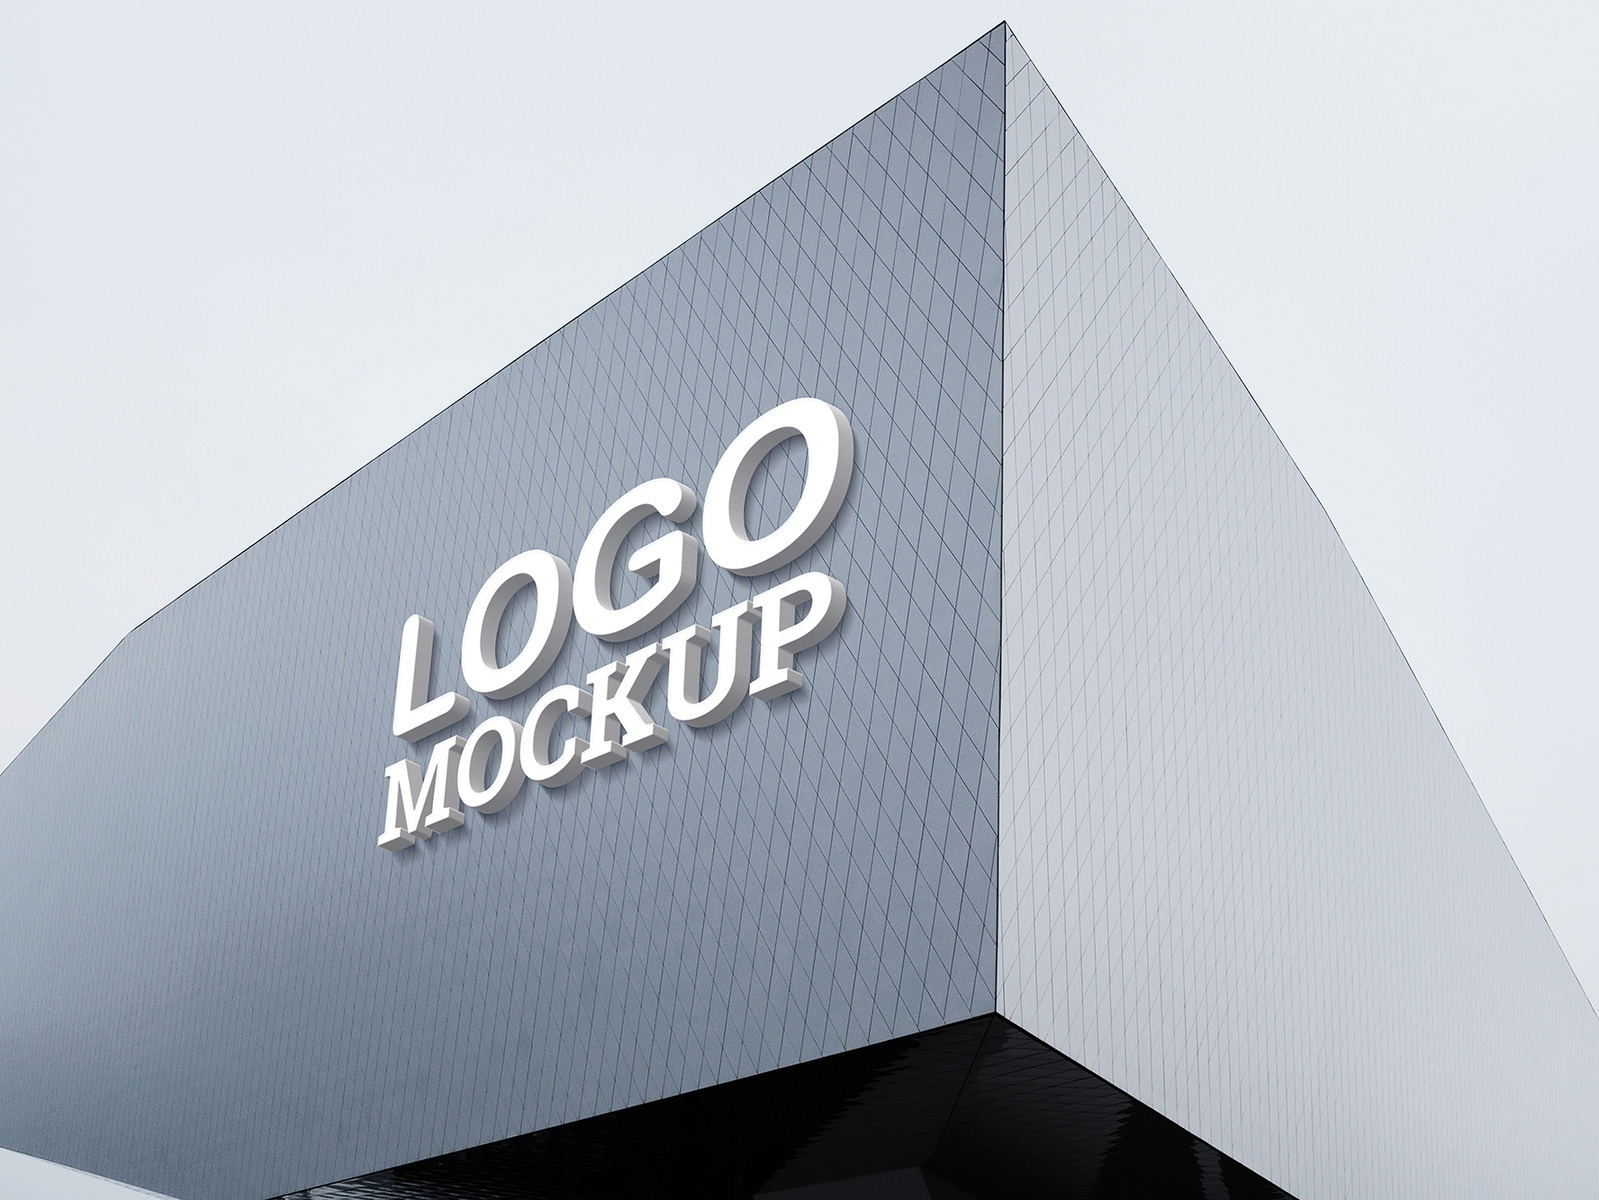 Download 3d Logo Mockup V3 Free Psd By Mockuphero On Dribbble